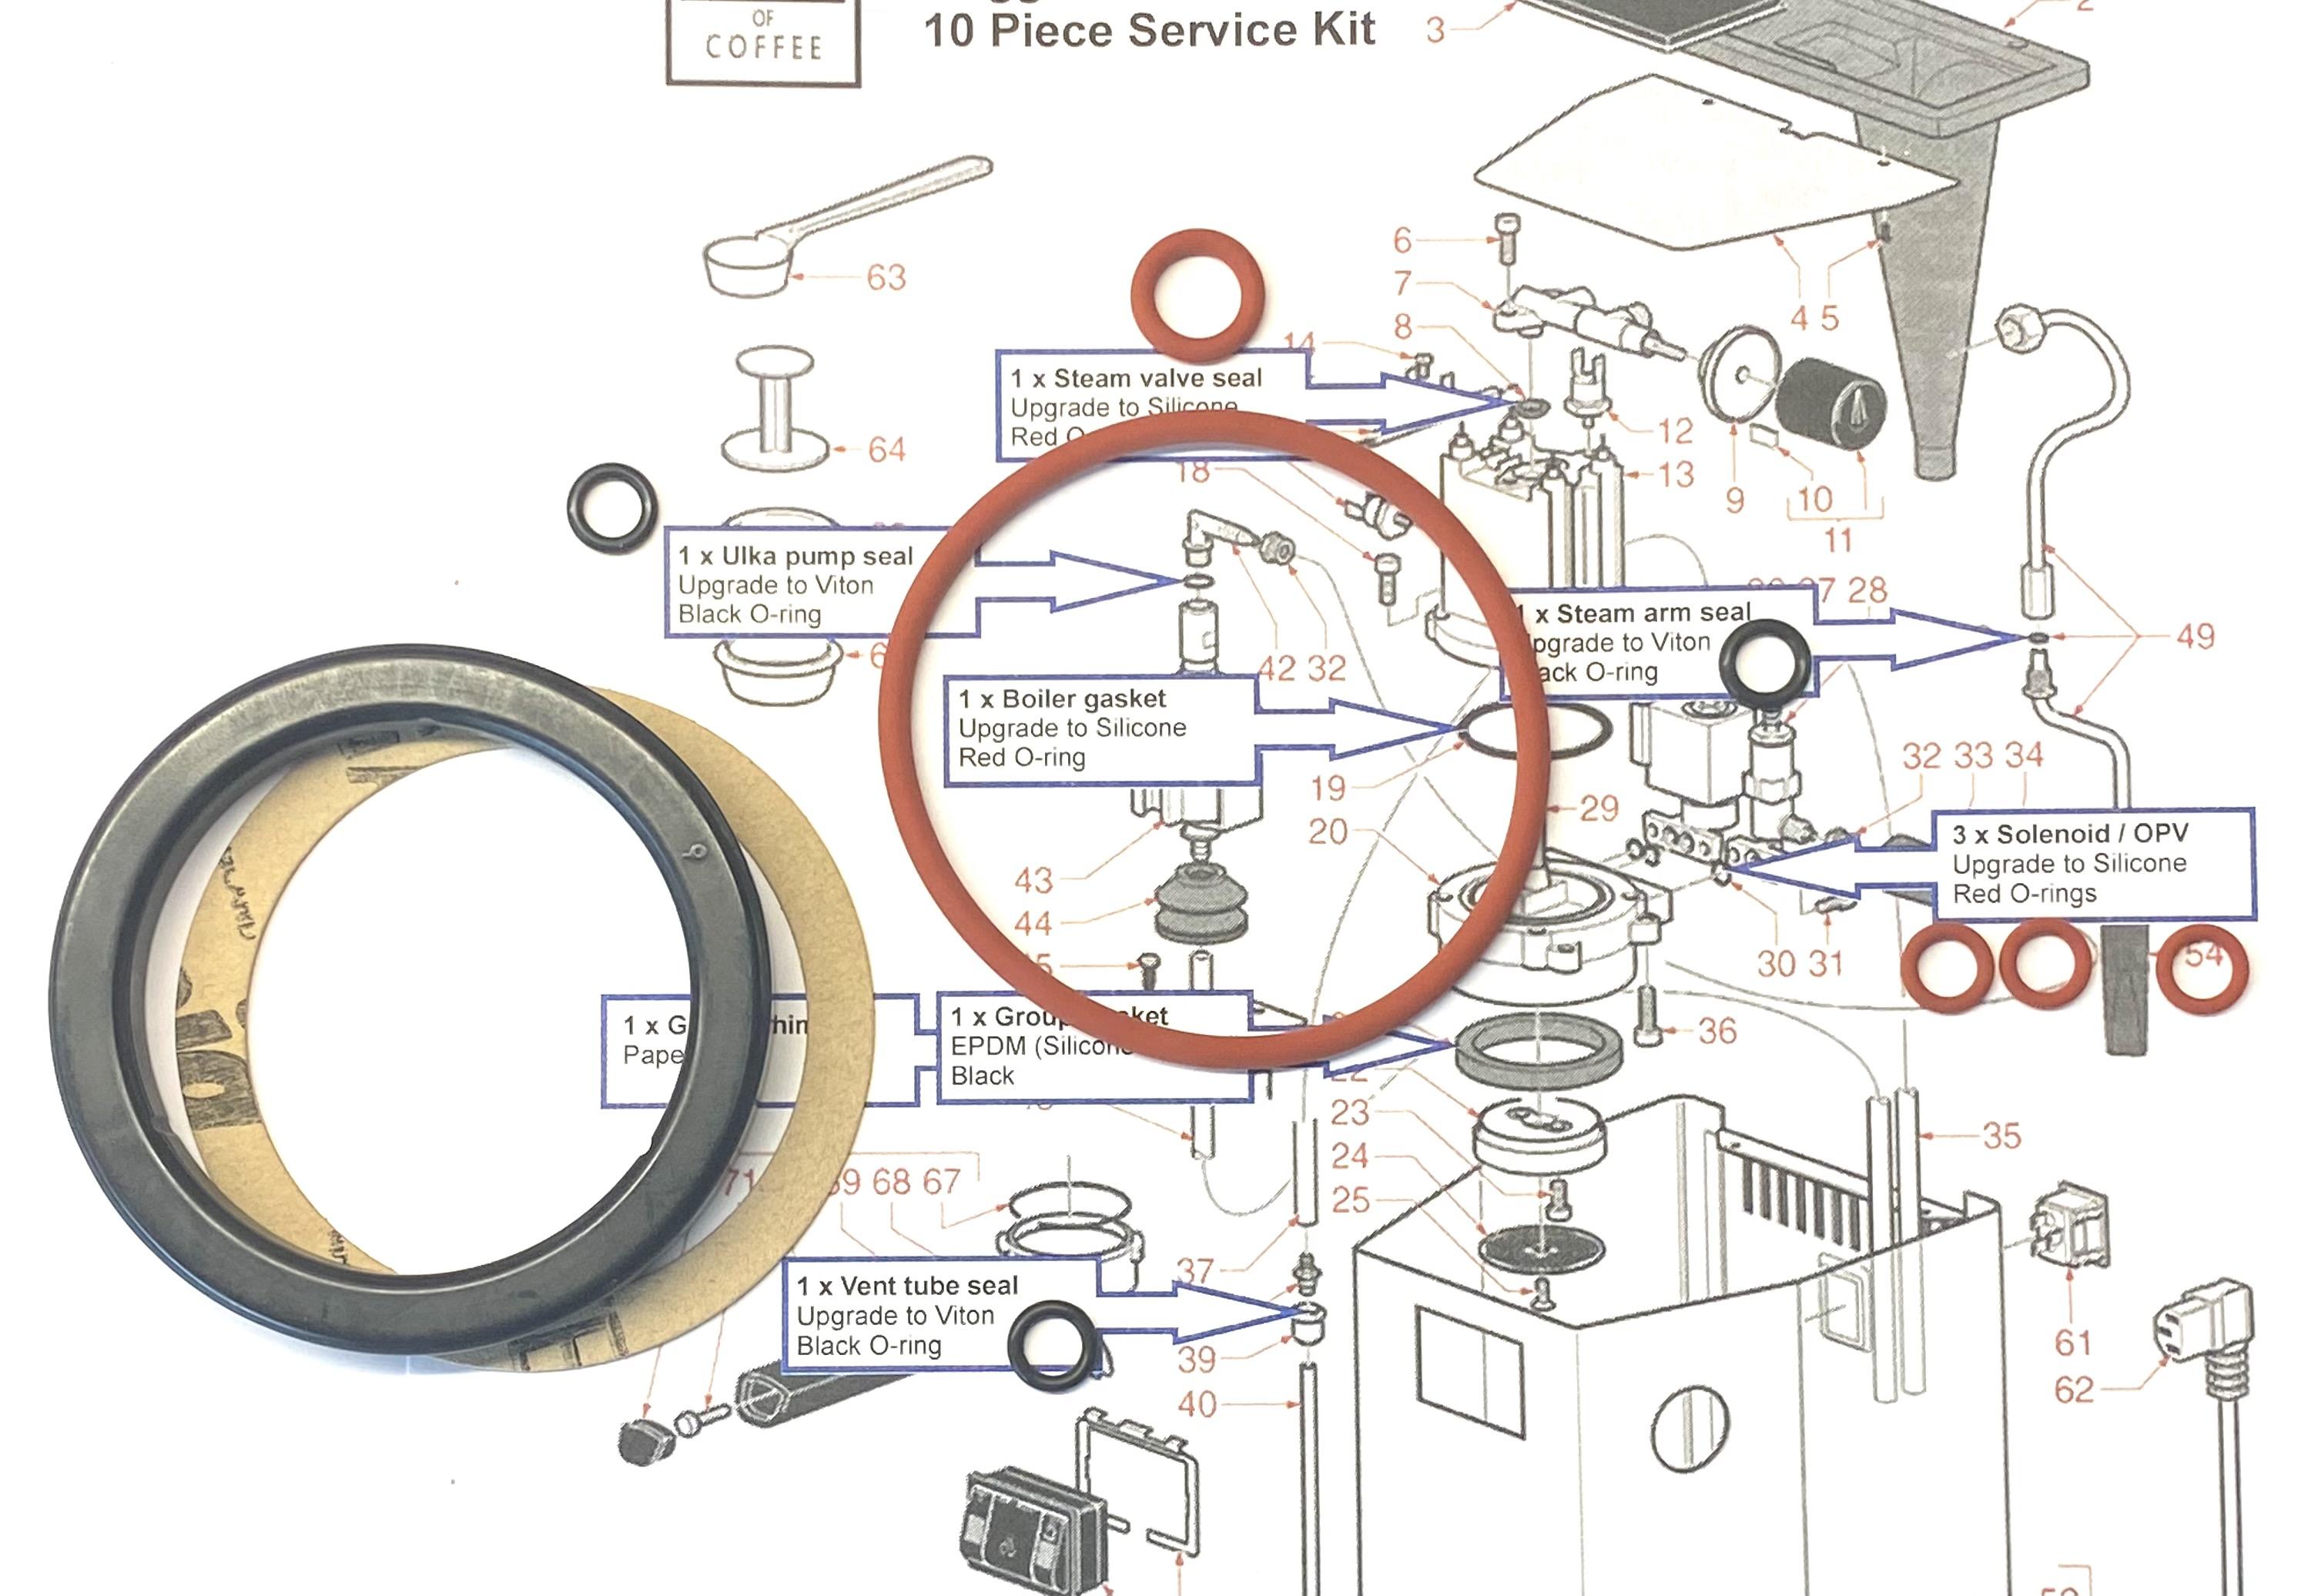 2x Gaggia Classic Baby Evo 7x O Ring Service Repair kits EPDM Boiler,1st P&P 